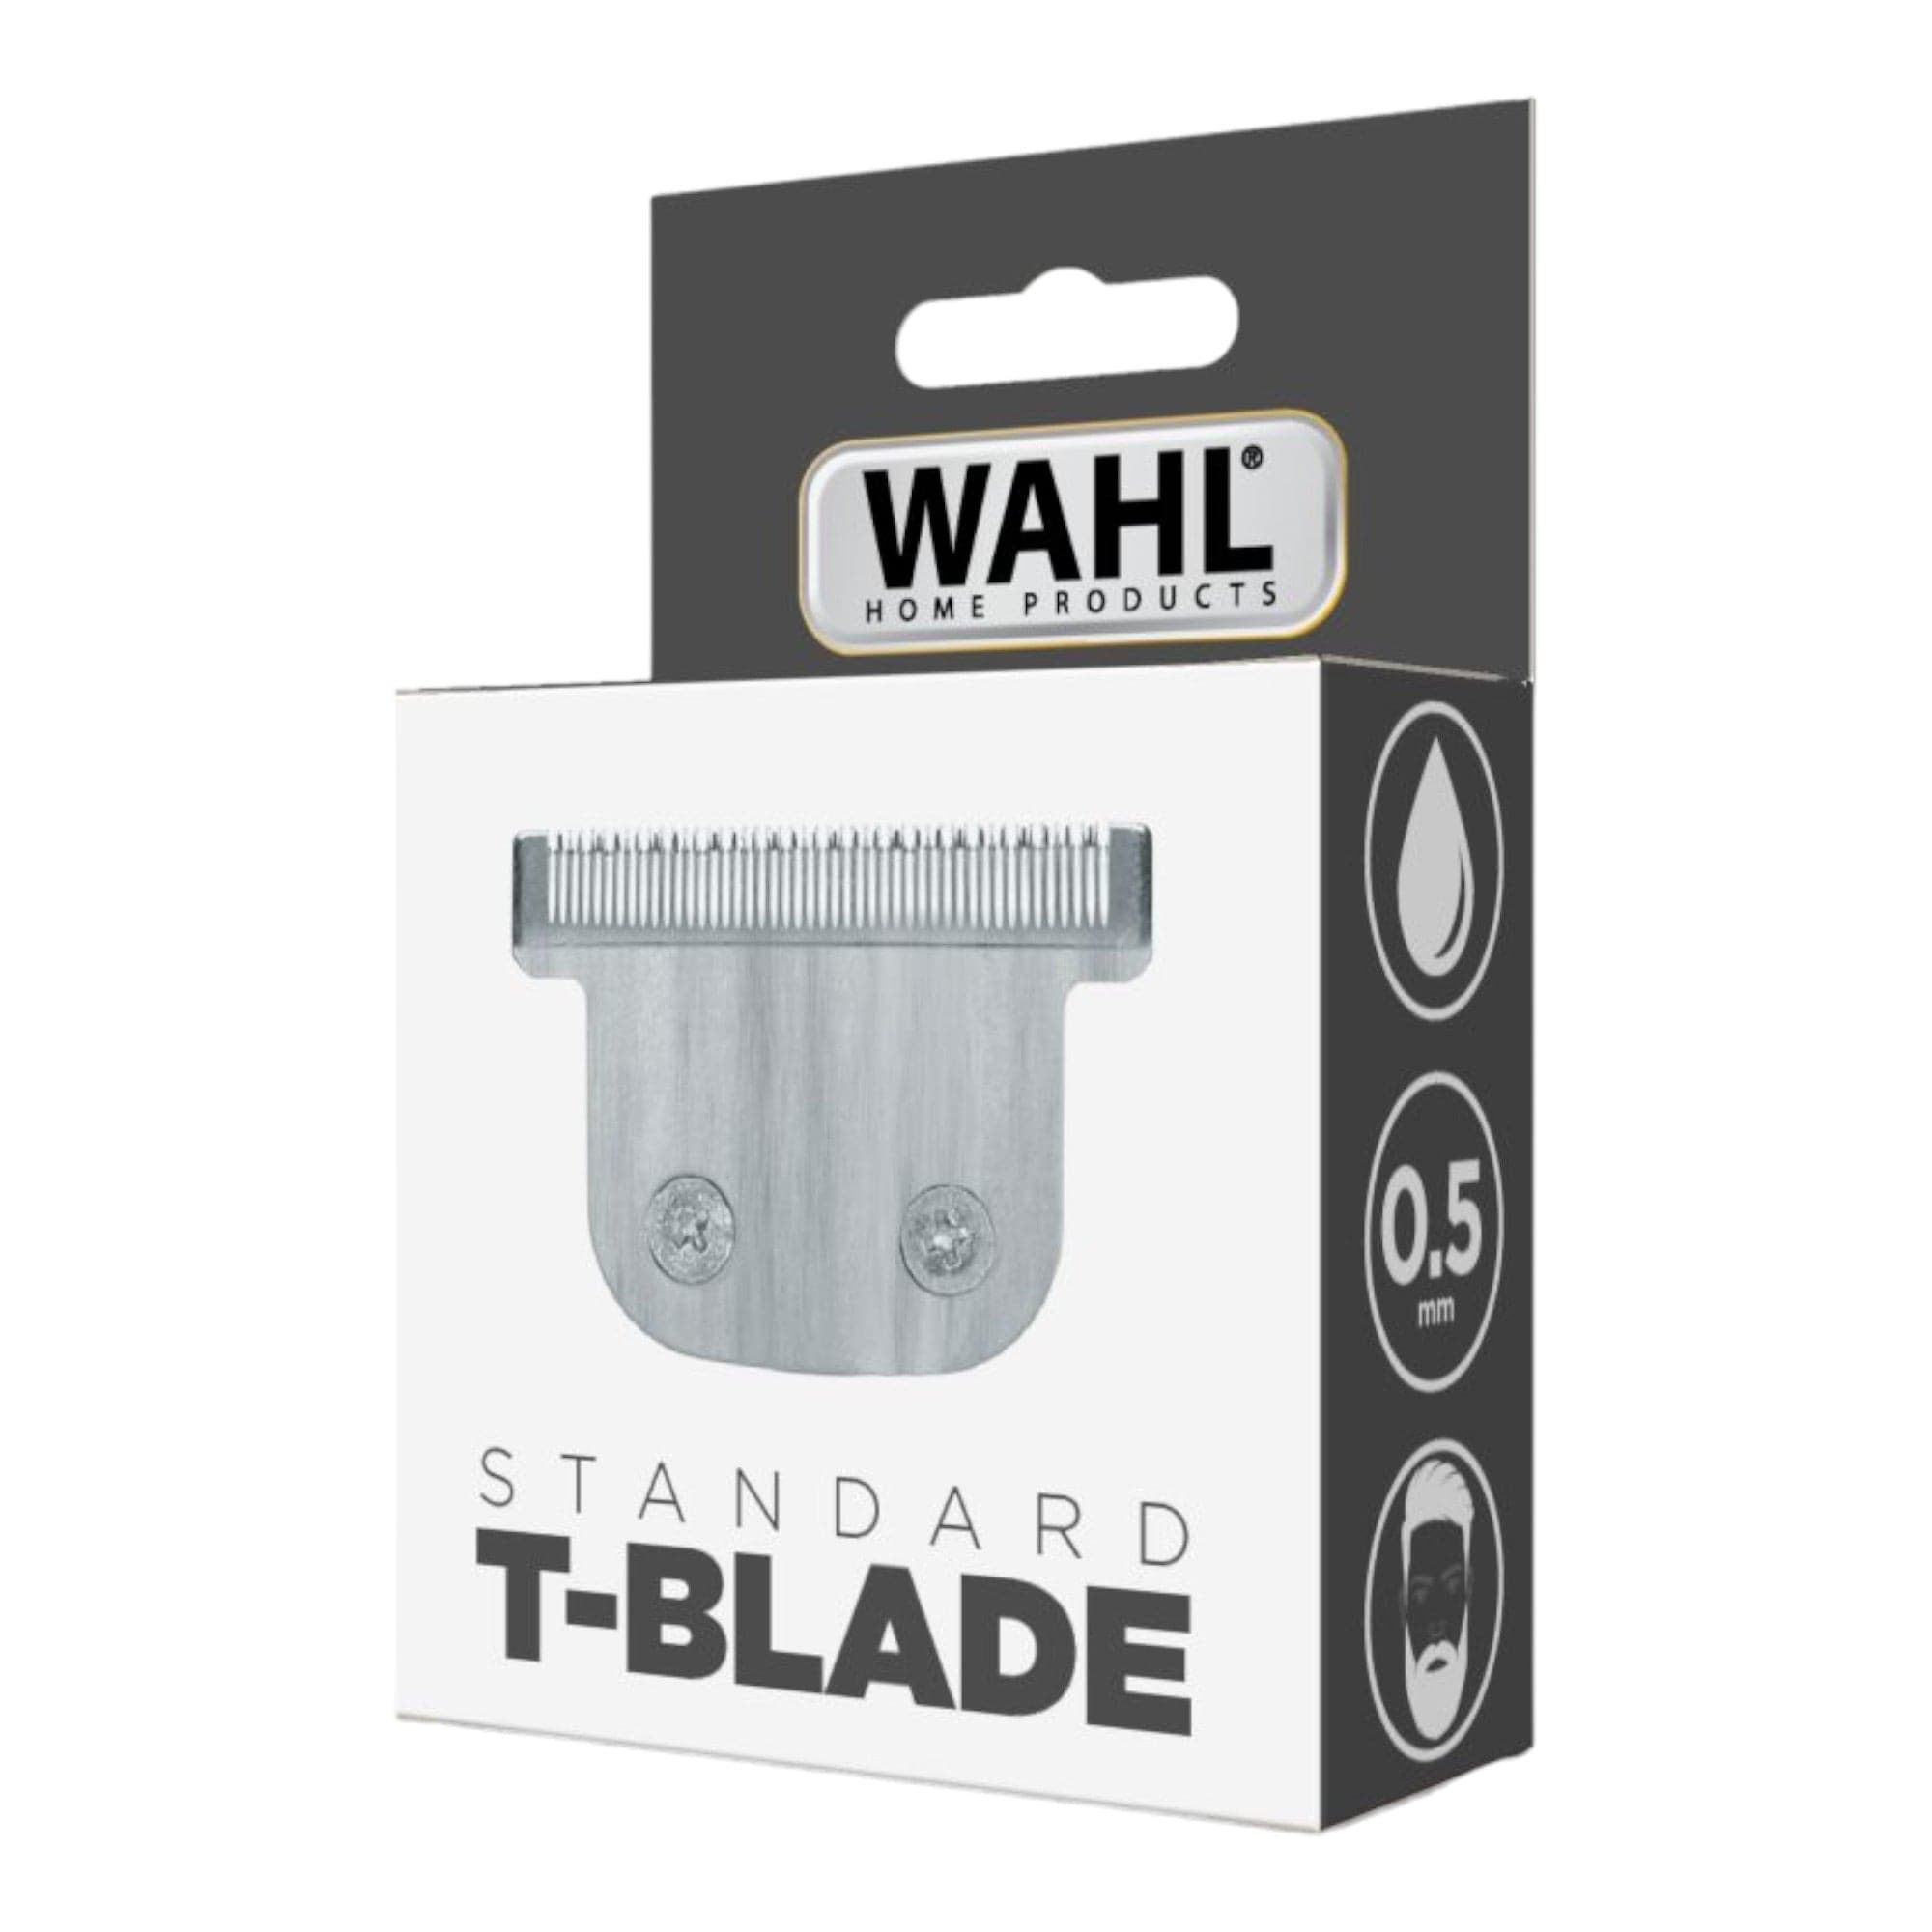 Wahl - Standard T-Blade 2144-208